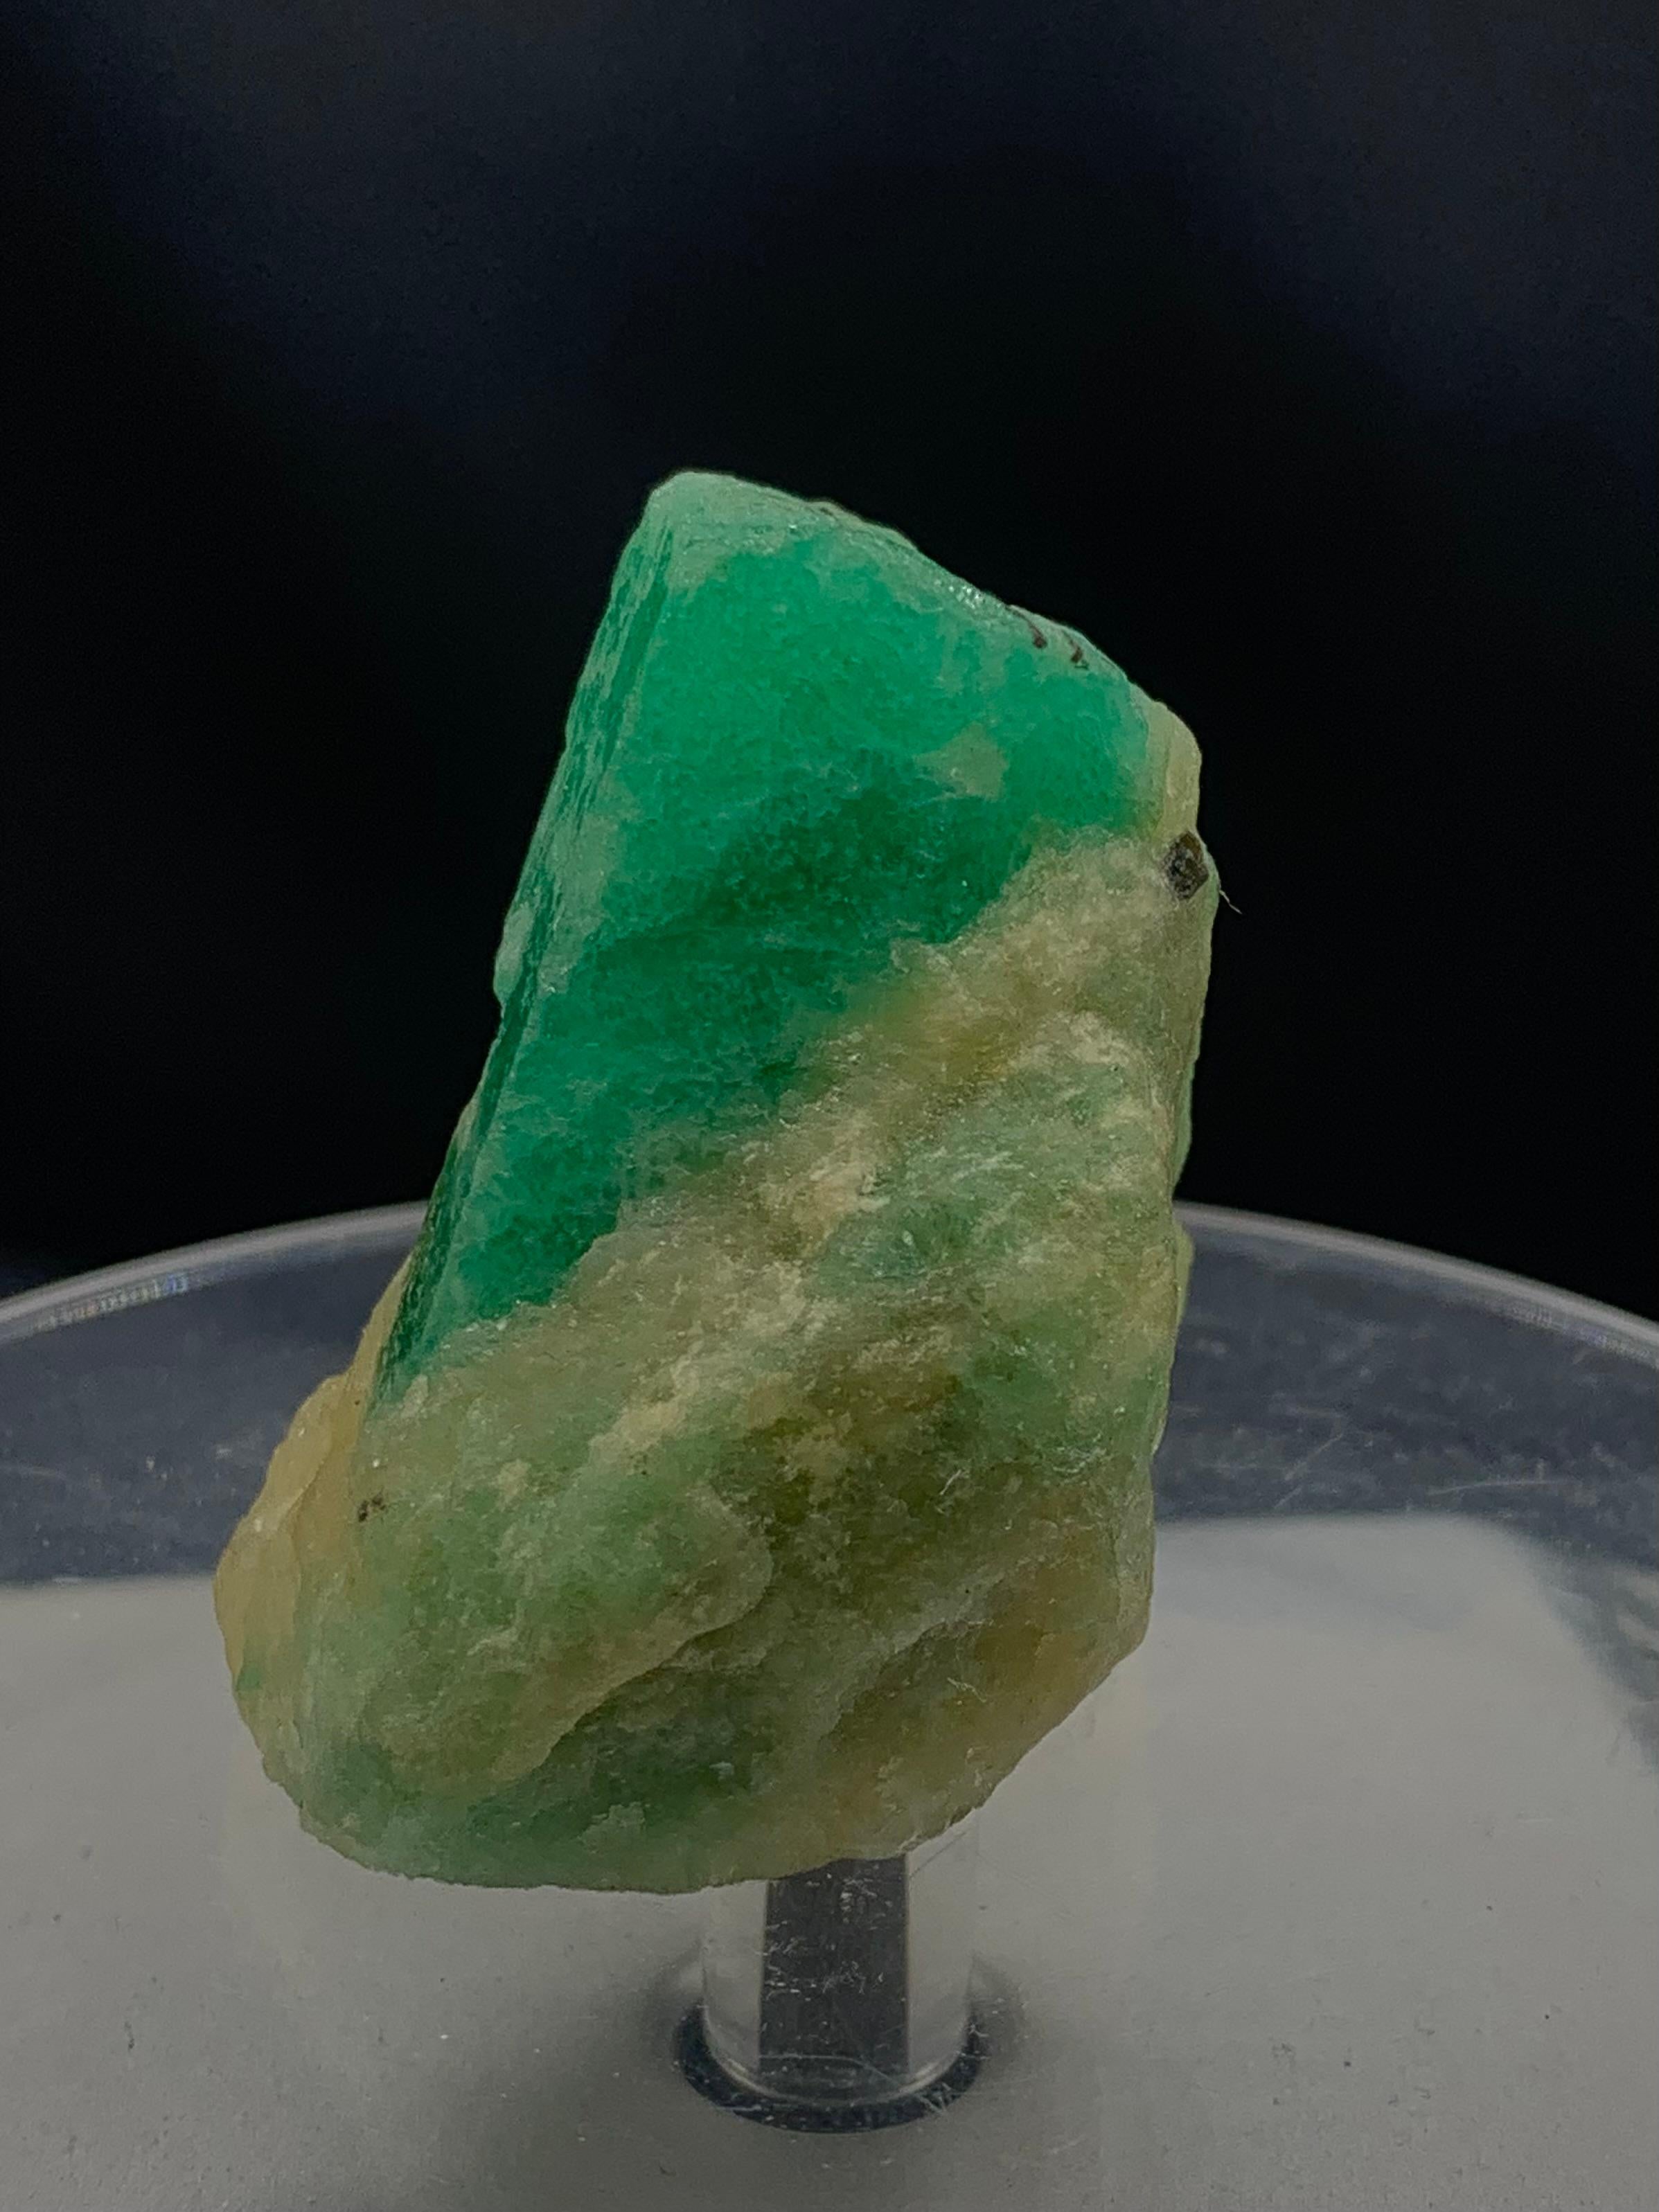 Contemporary Gorgeous 44 Gram Natural Emerald Specimen with Calcite Matrix from Pakistan Mine